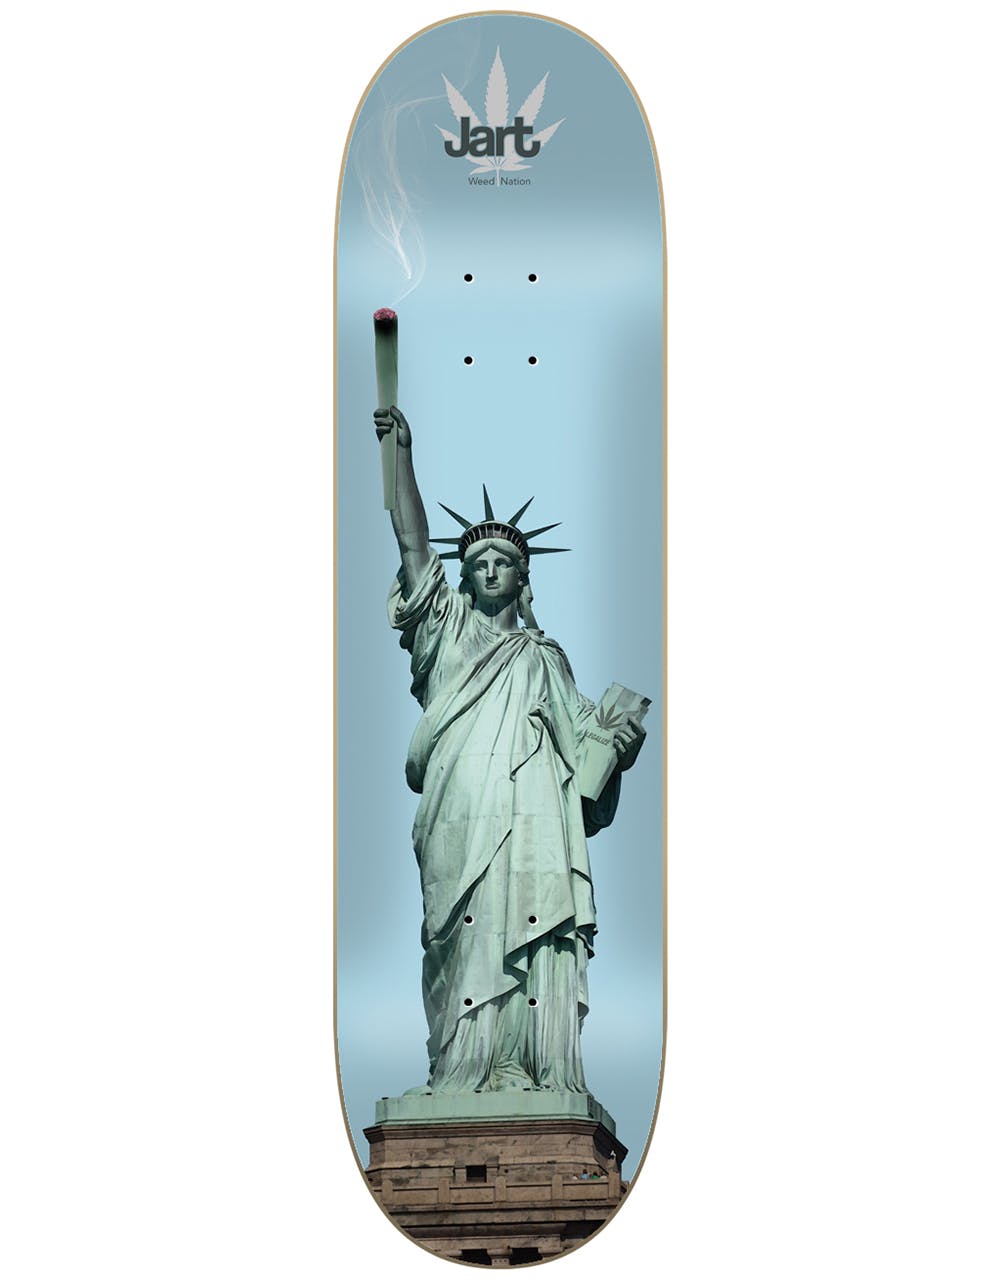 Jart Weed Nation "Liberty" Skateboard Deck - 8.625"